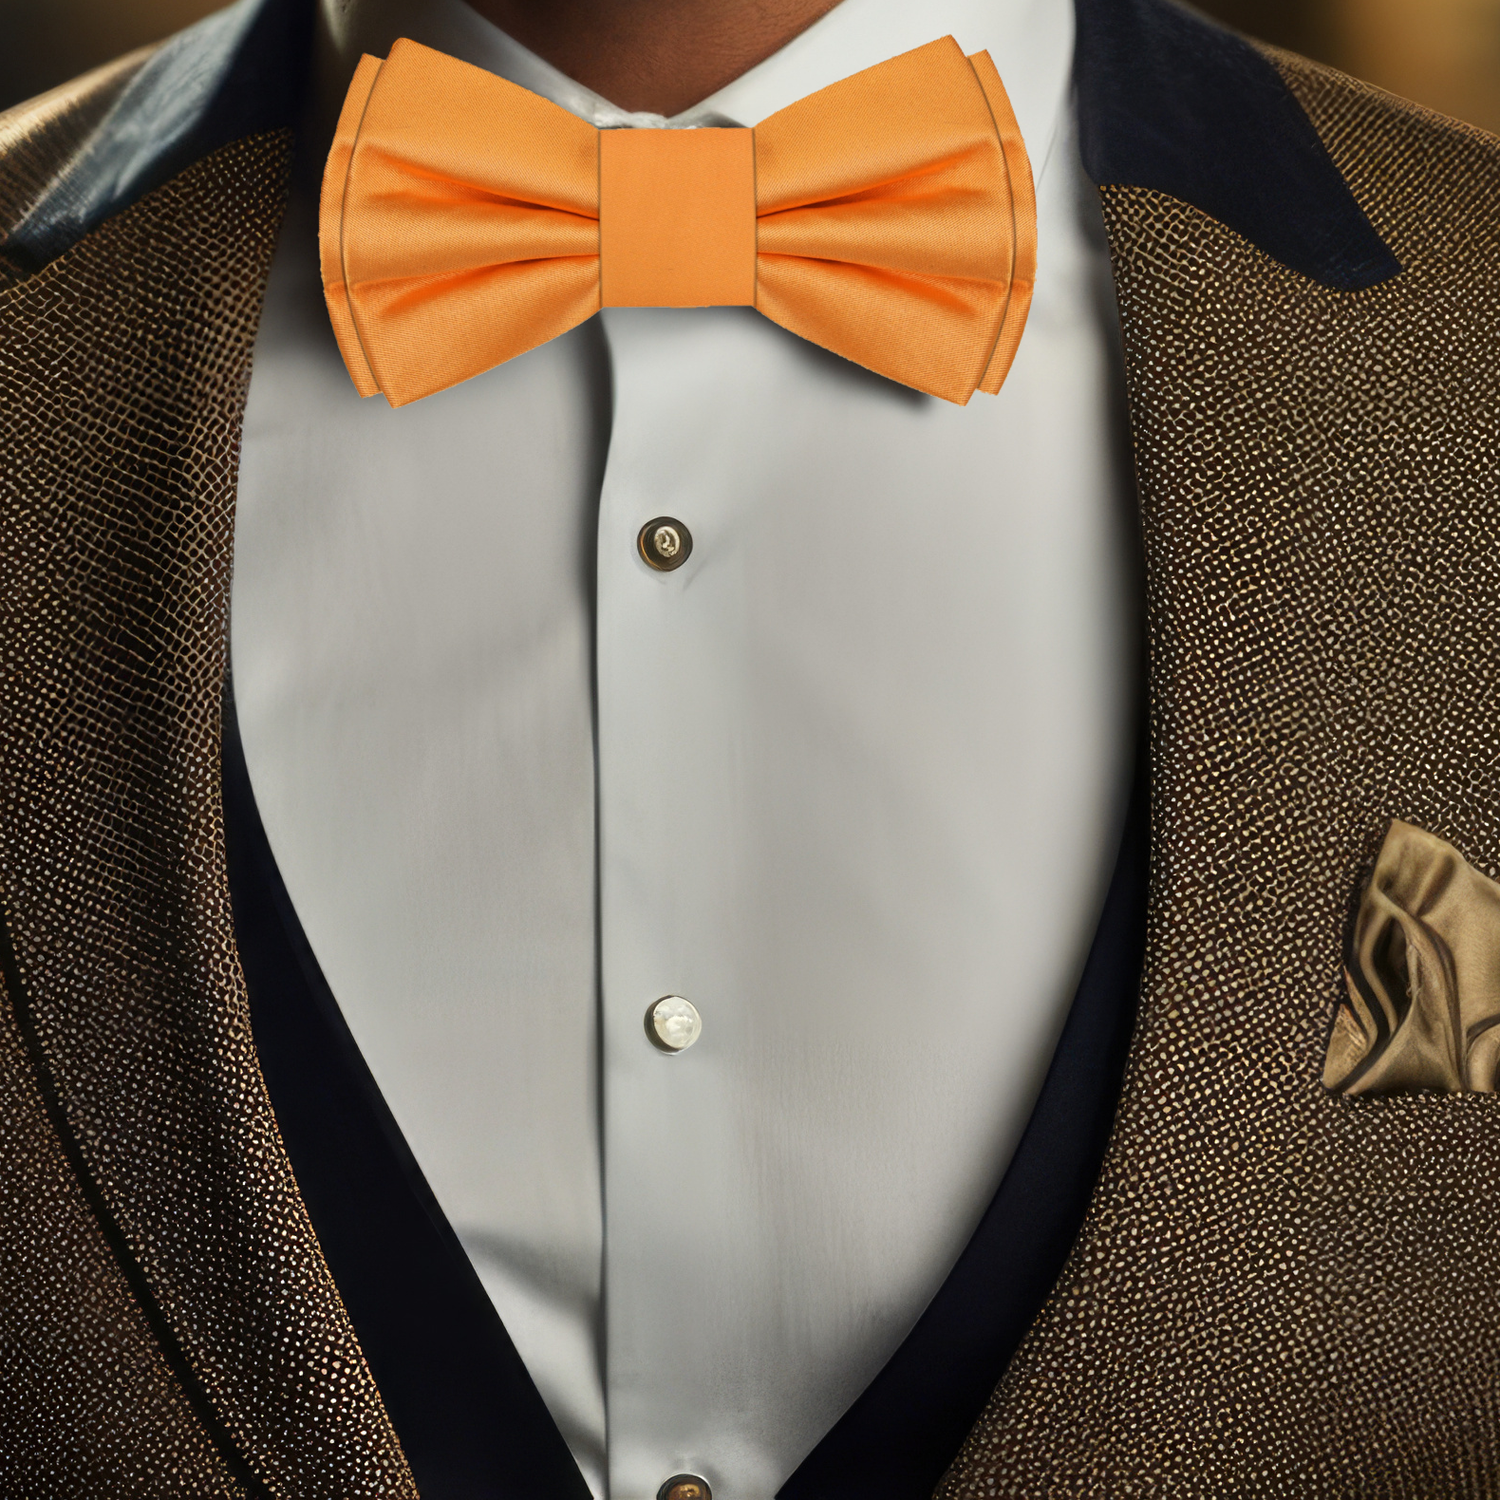 Solid Orange Bow Tie on Brown Suit